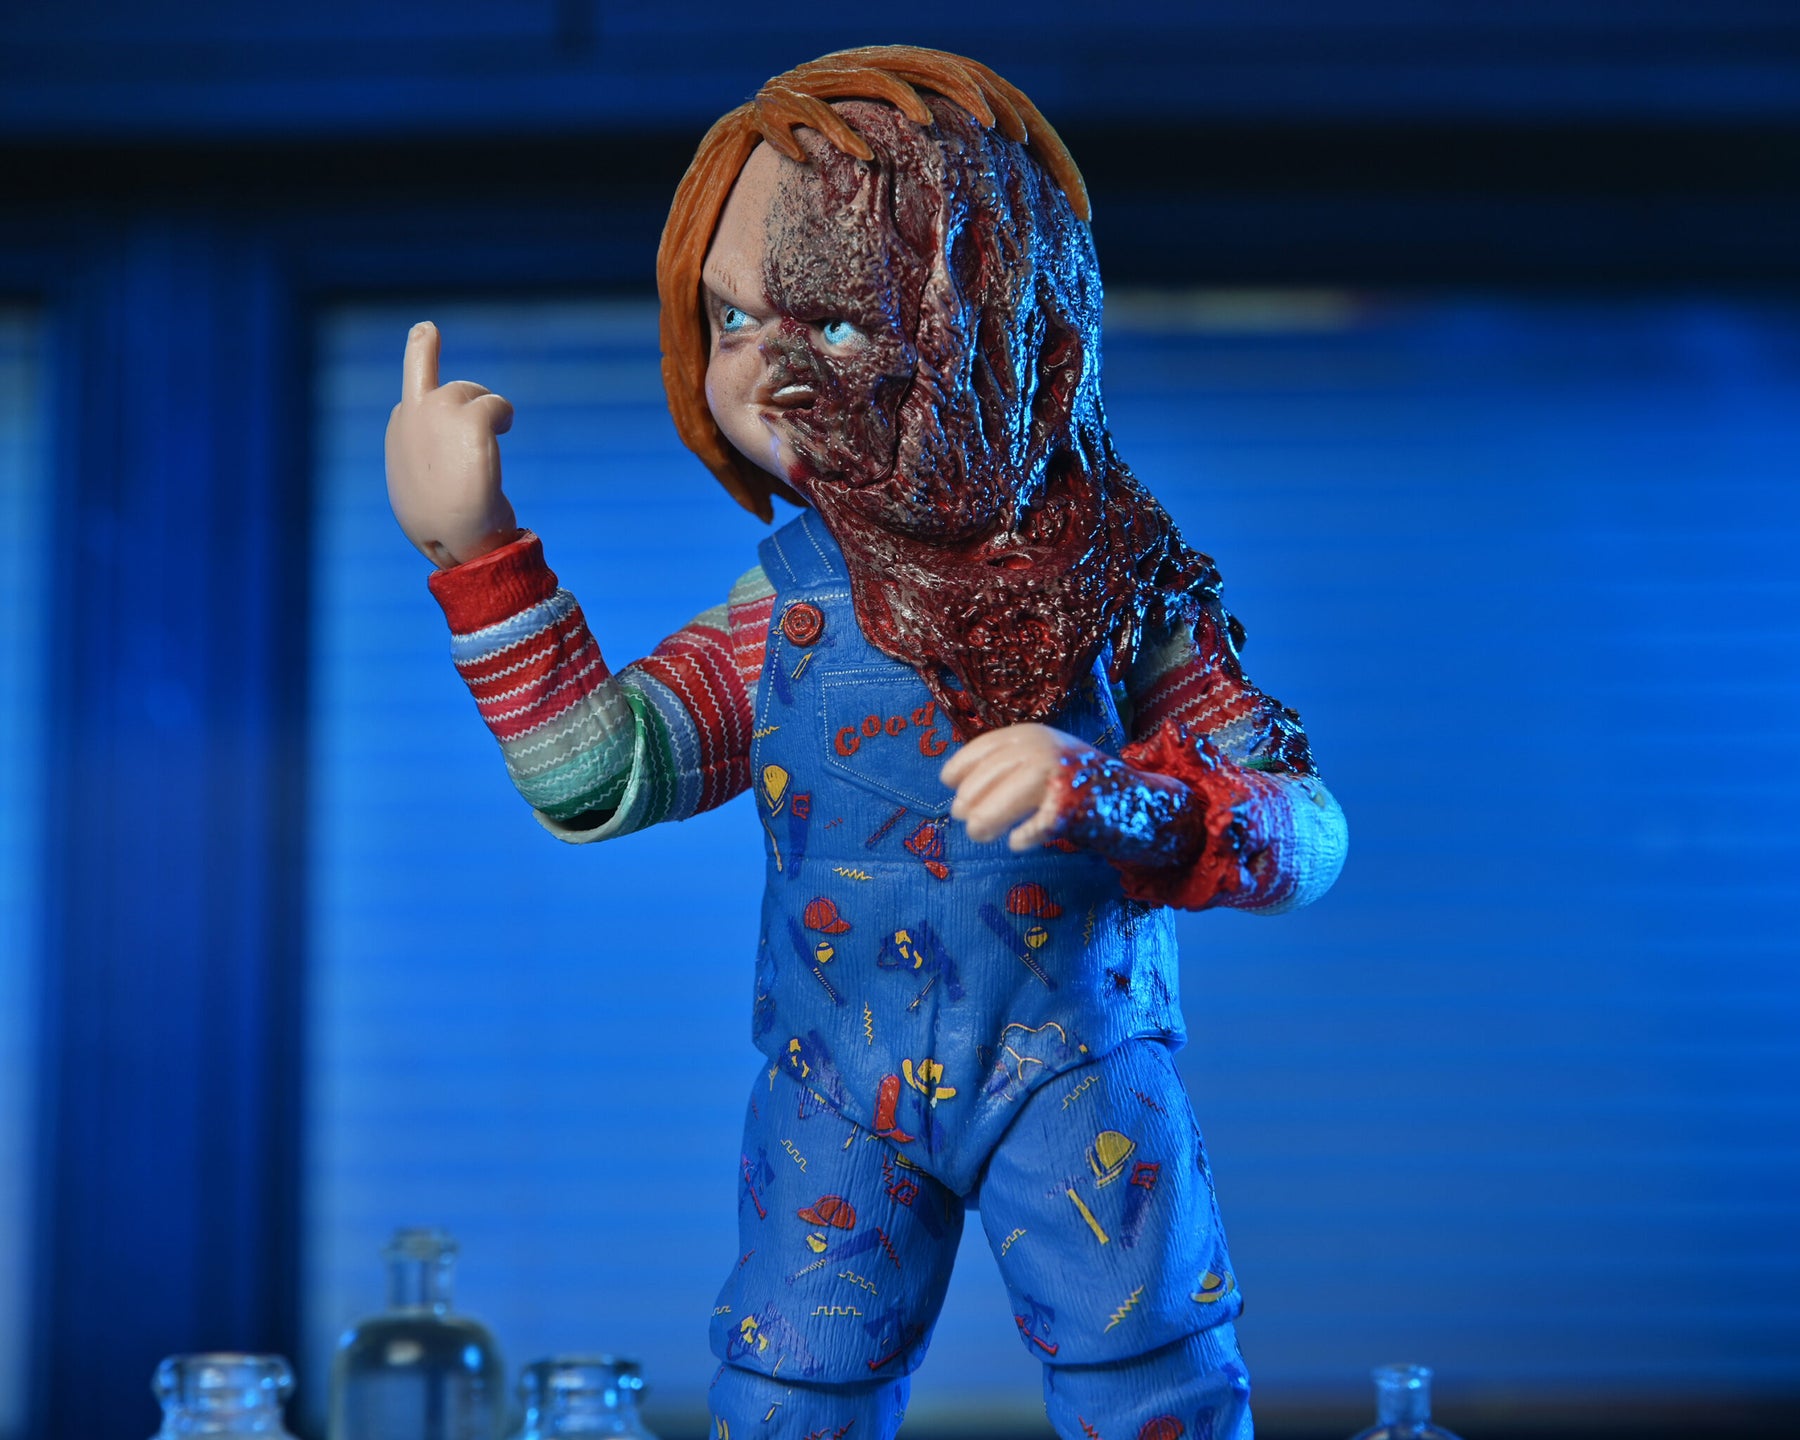 NECA - Ultimate Chucky (TV Series) 7" Scale Action Figure